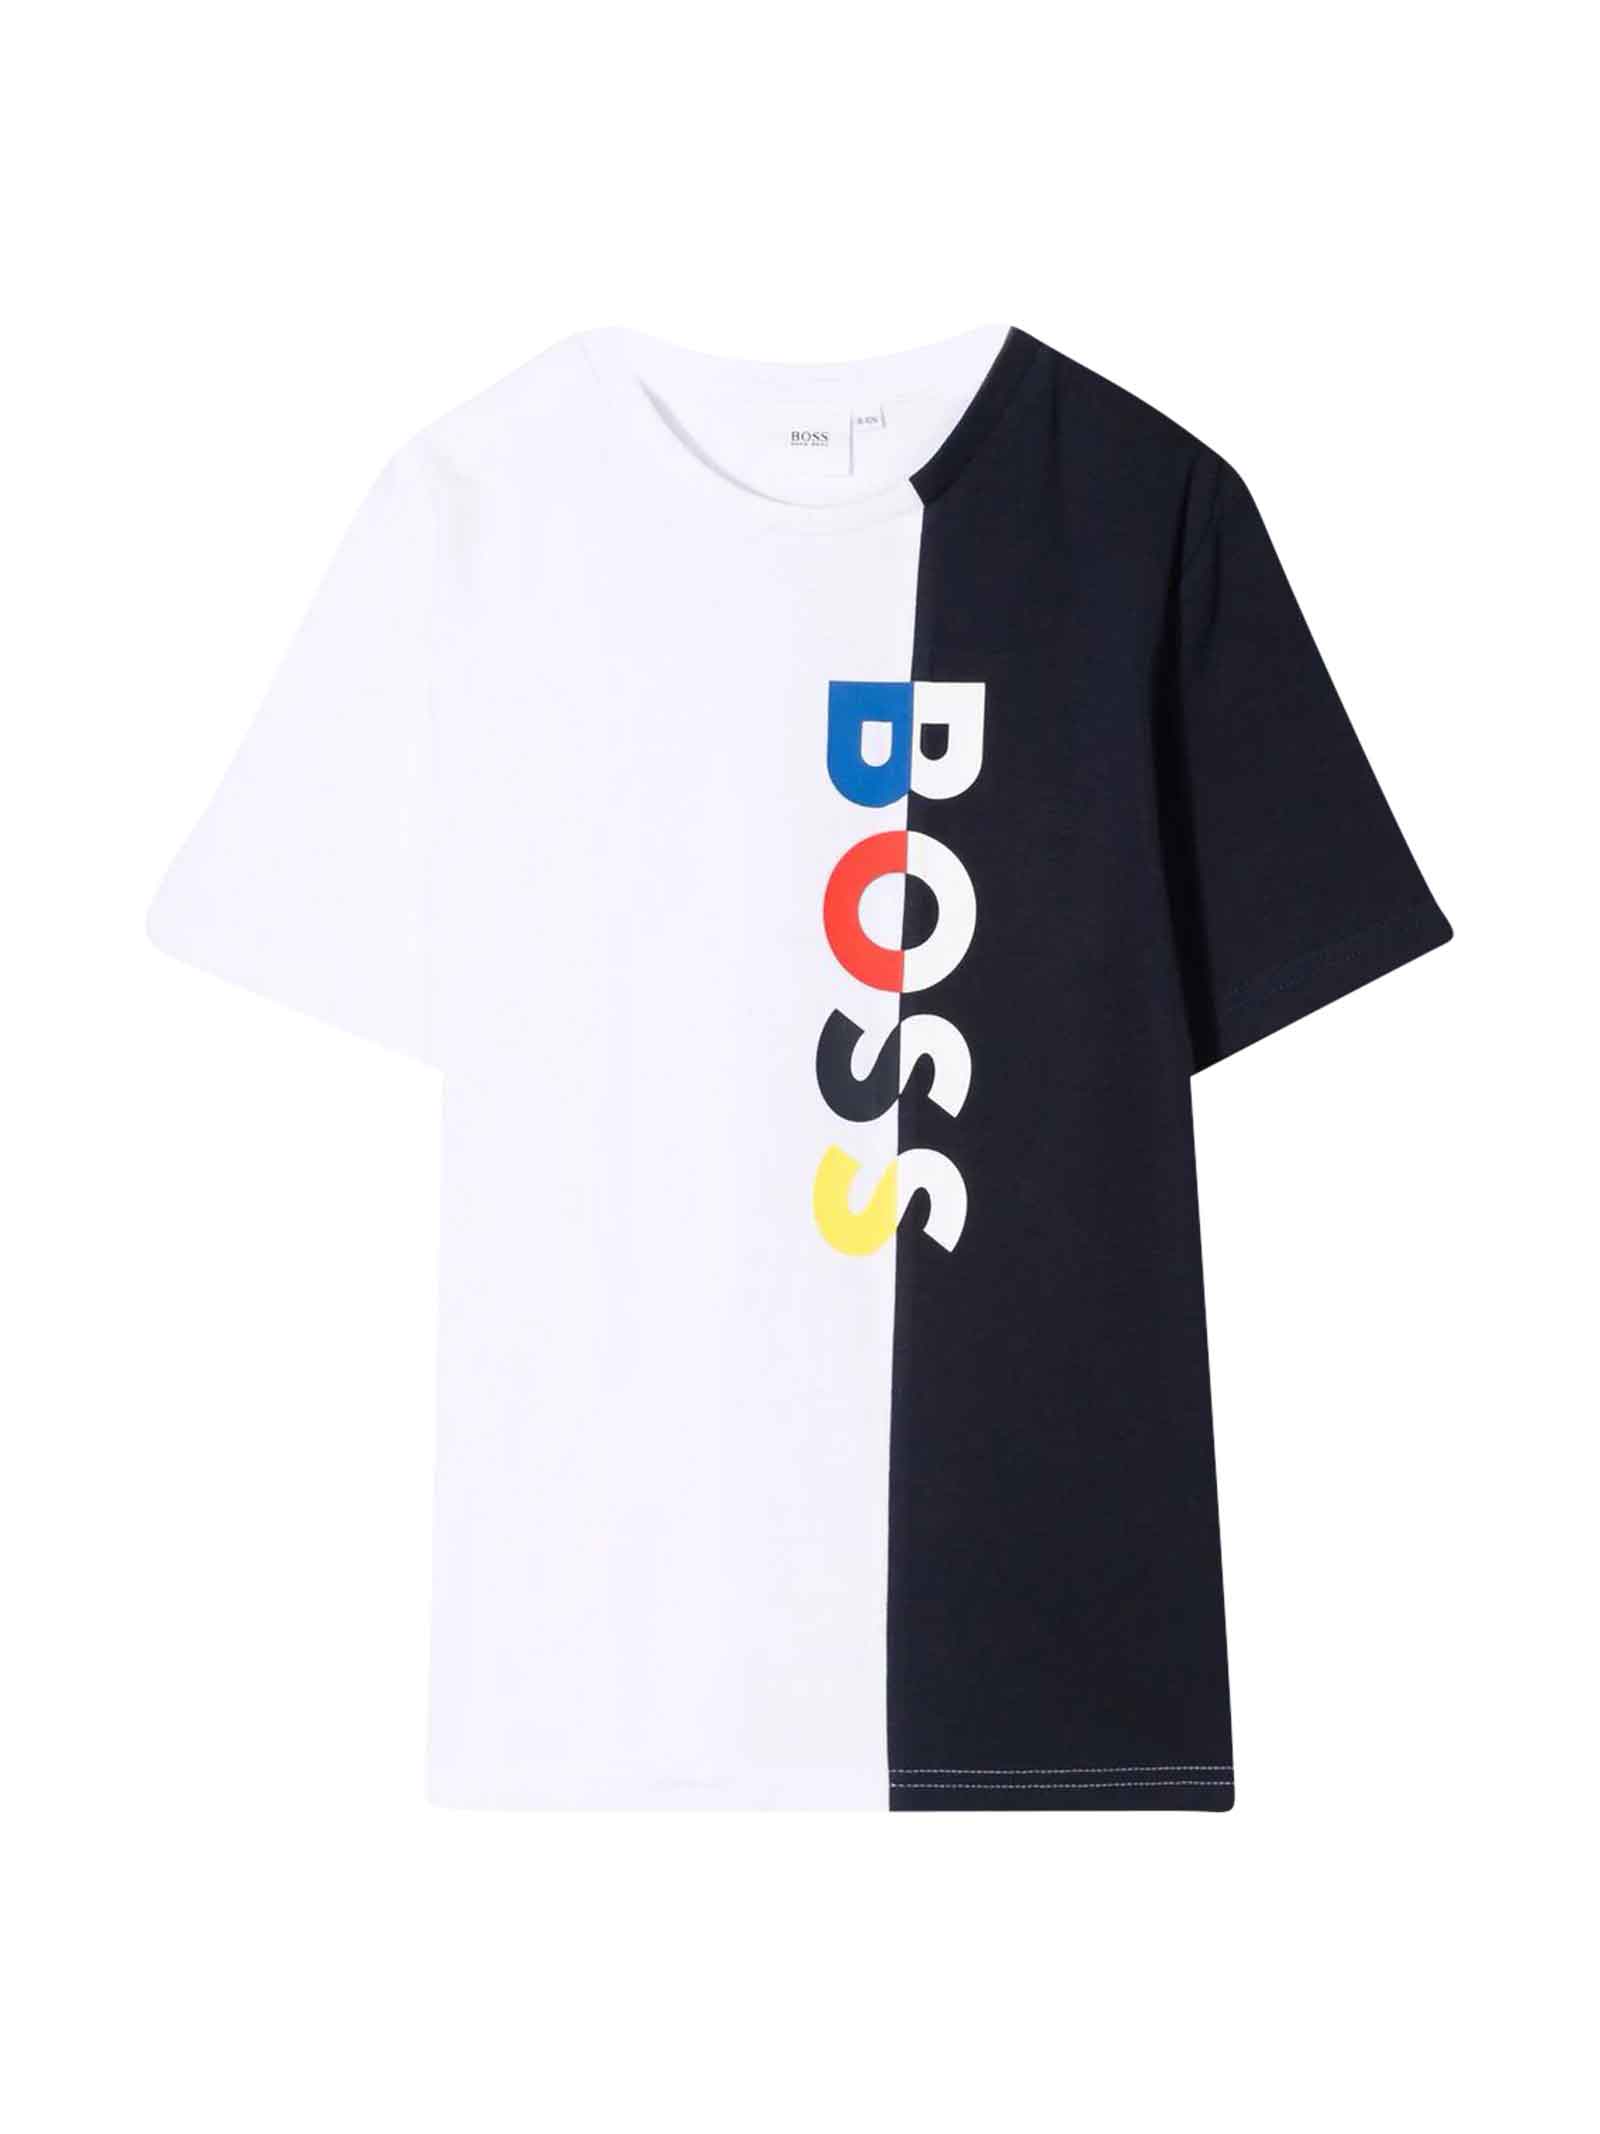 Hugo Boss Black And White Boy T-shirt With Print